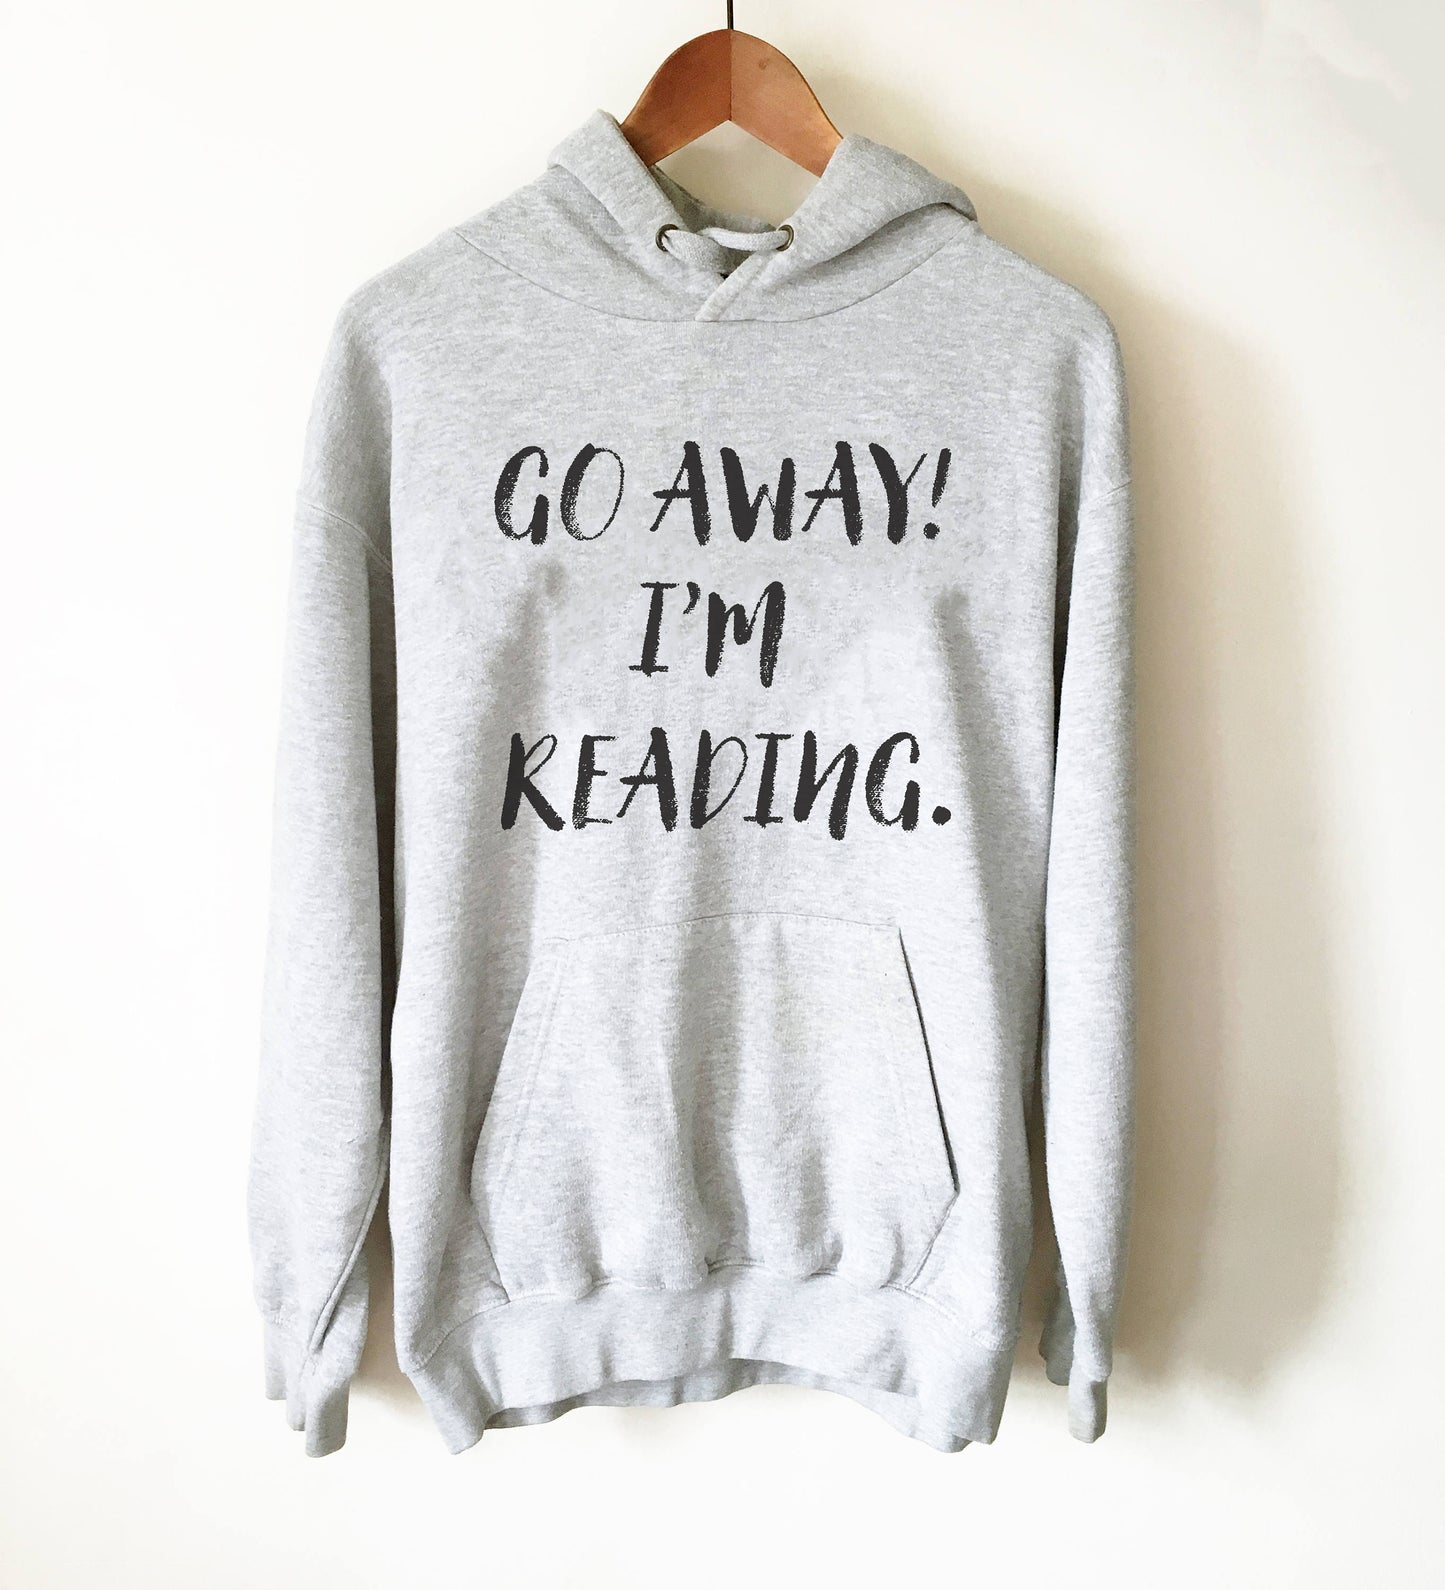 Go Away! I'm Reading Hoodie - Book lover hoodie - Book lover gift - Reading shirt - Book lover gifts - Bookworm gift - Bibliophile